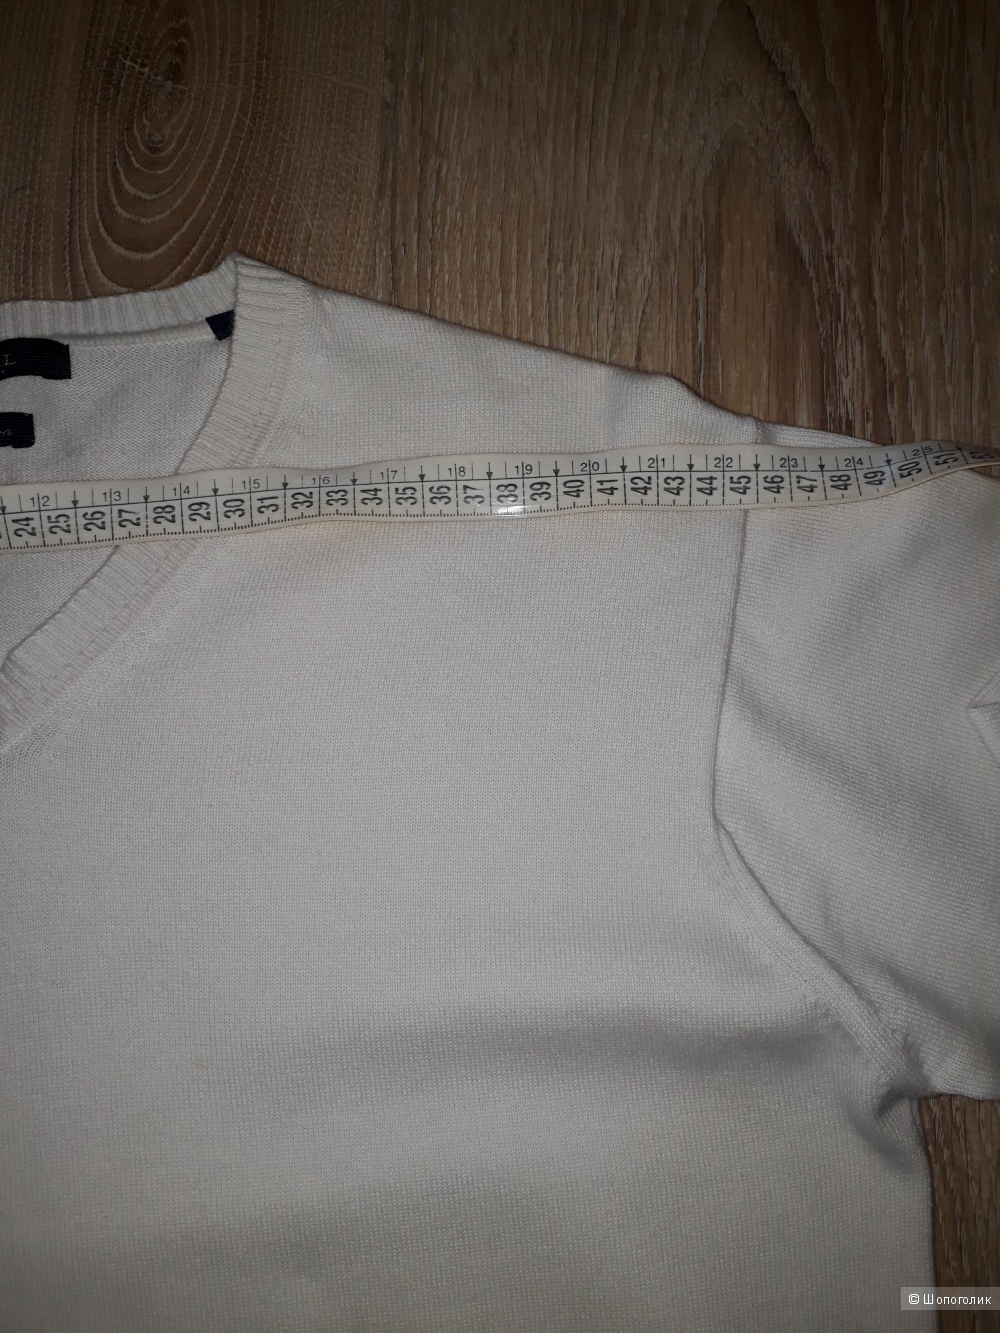 Пуловер мужской mc neal, размер s